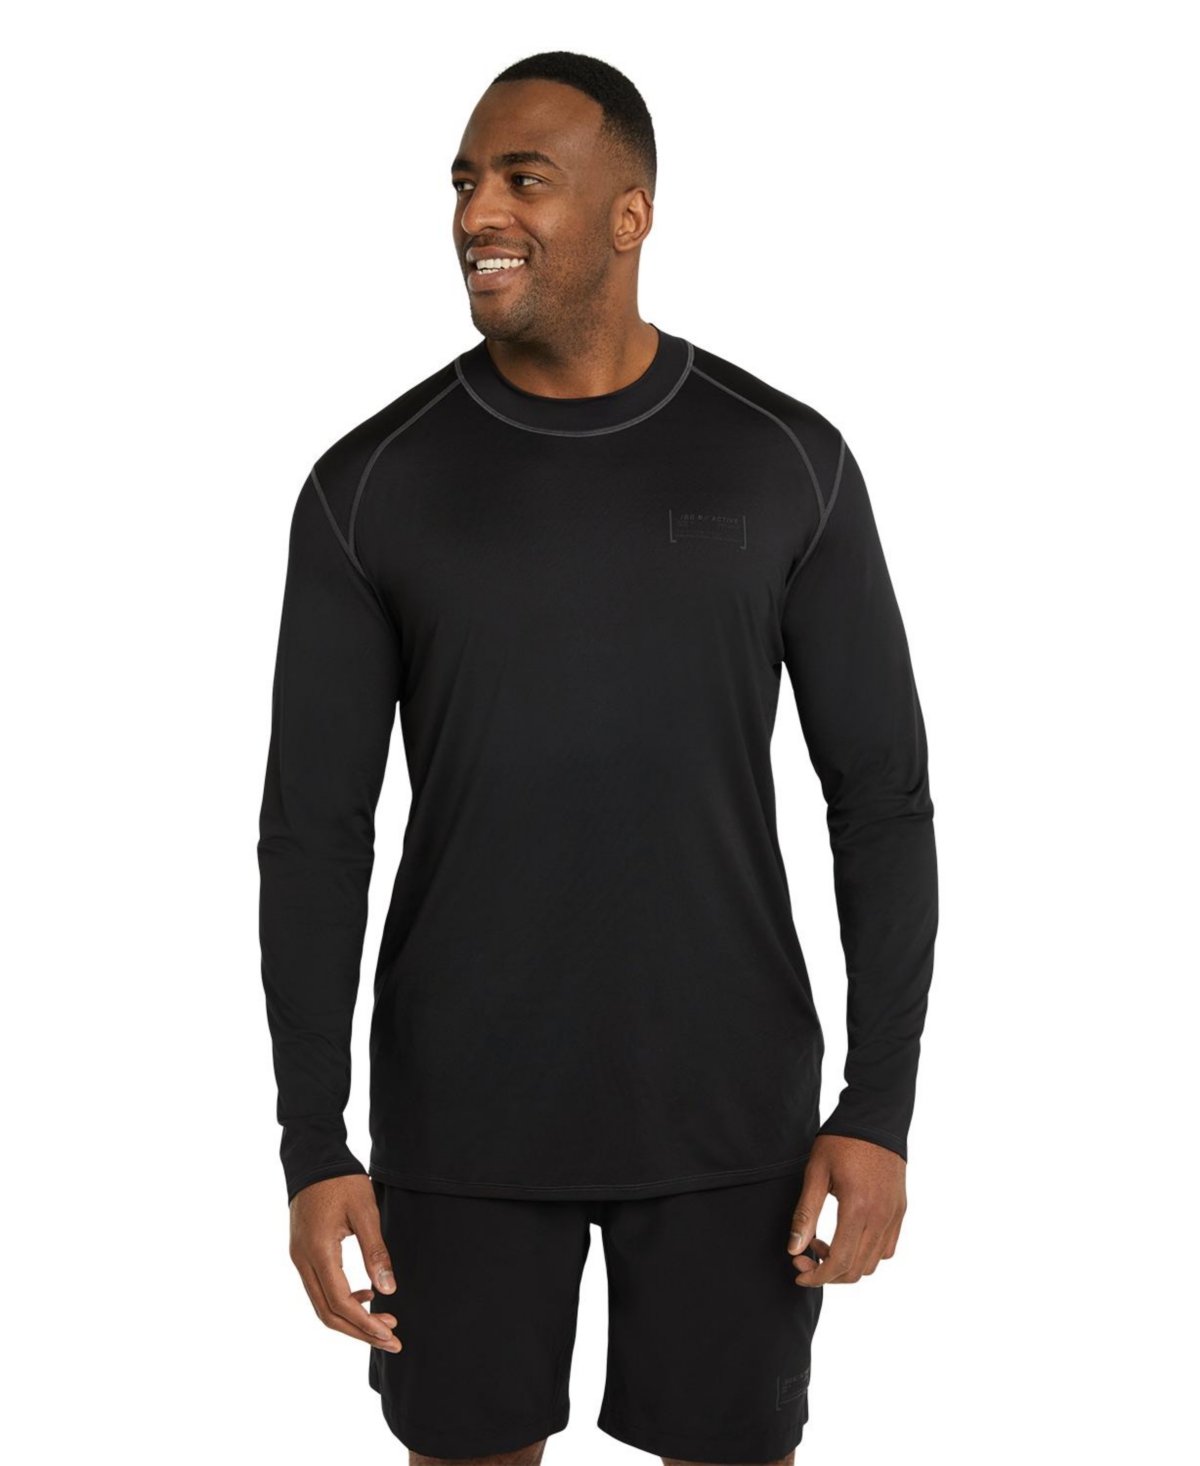 Men's Johnny g Active Long Sleeve Swim Shirt - Black